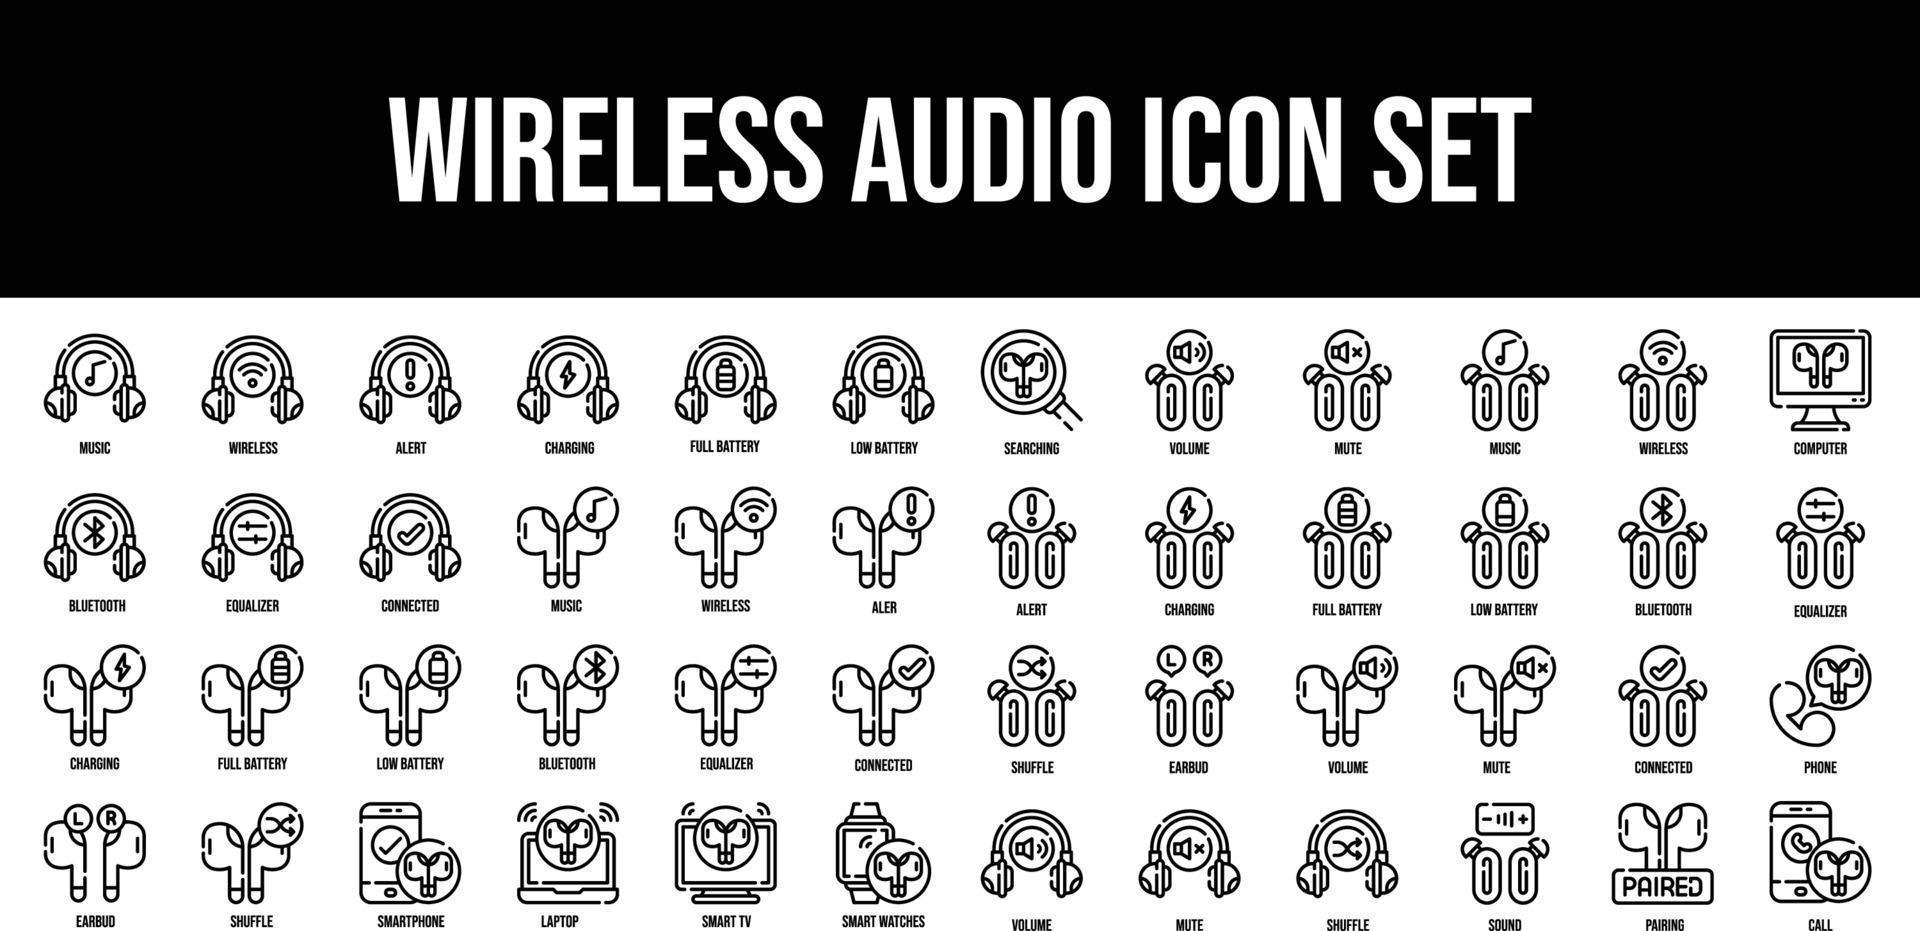 senza fili Audio ictus schema icone impostato vettore